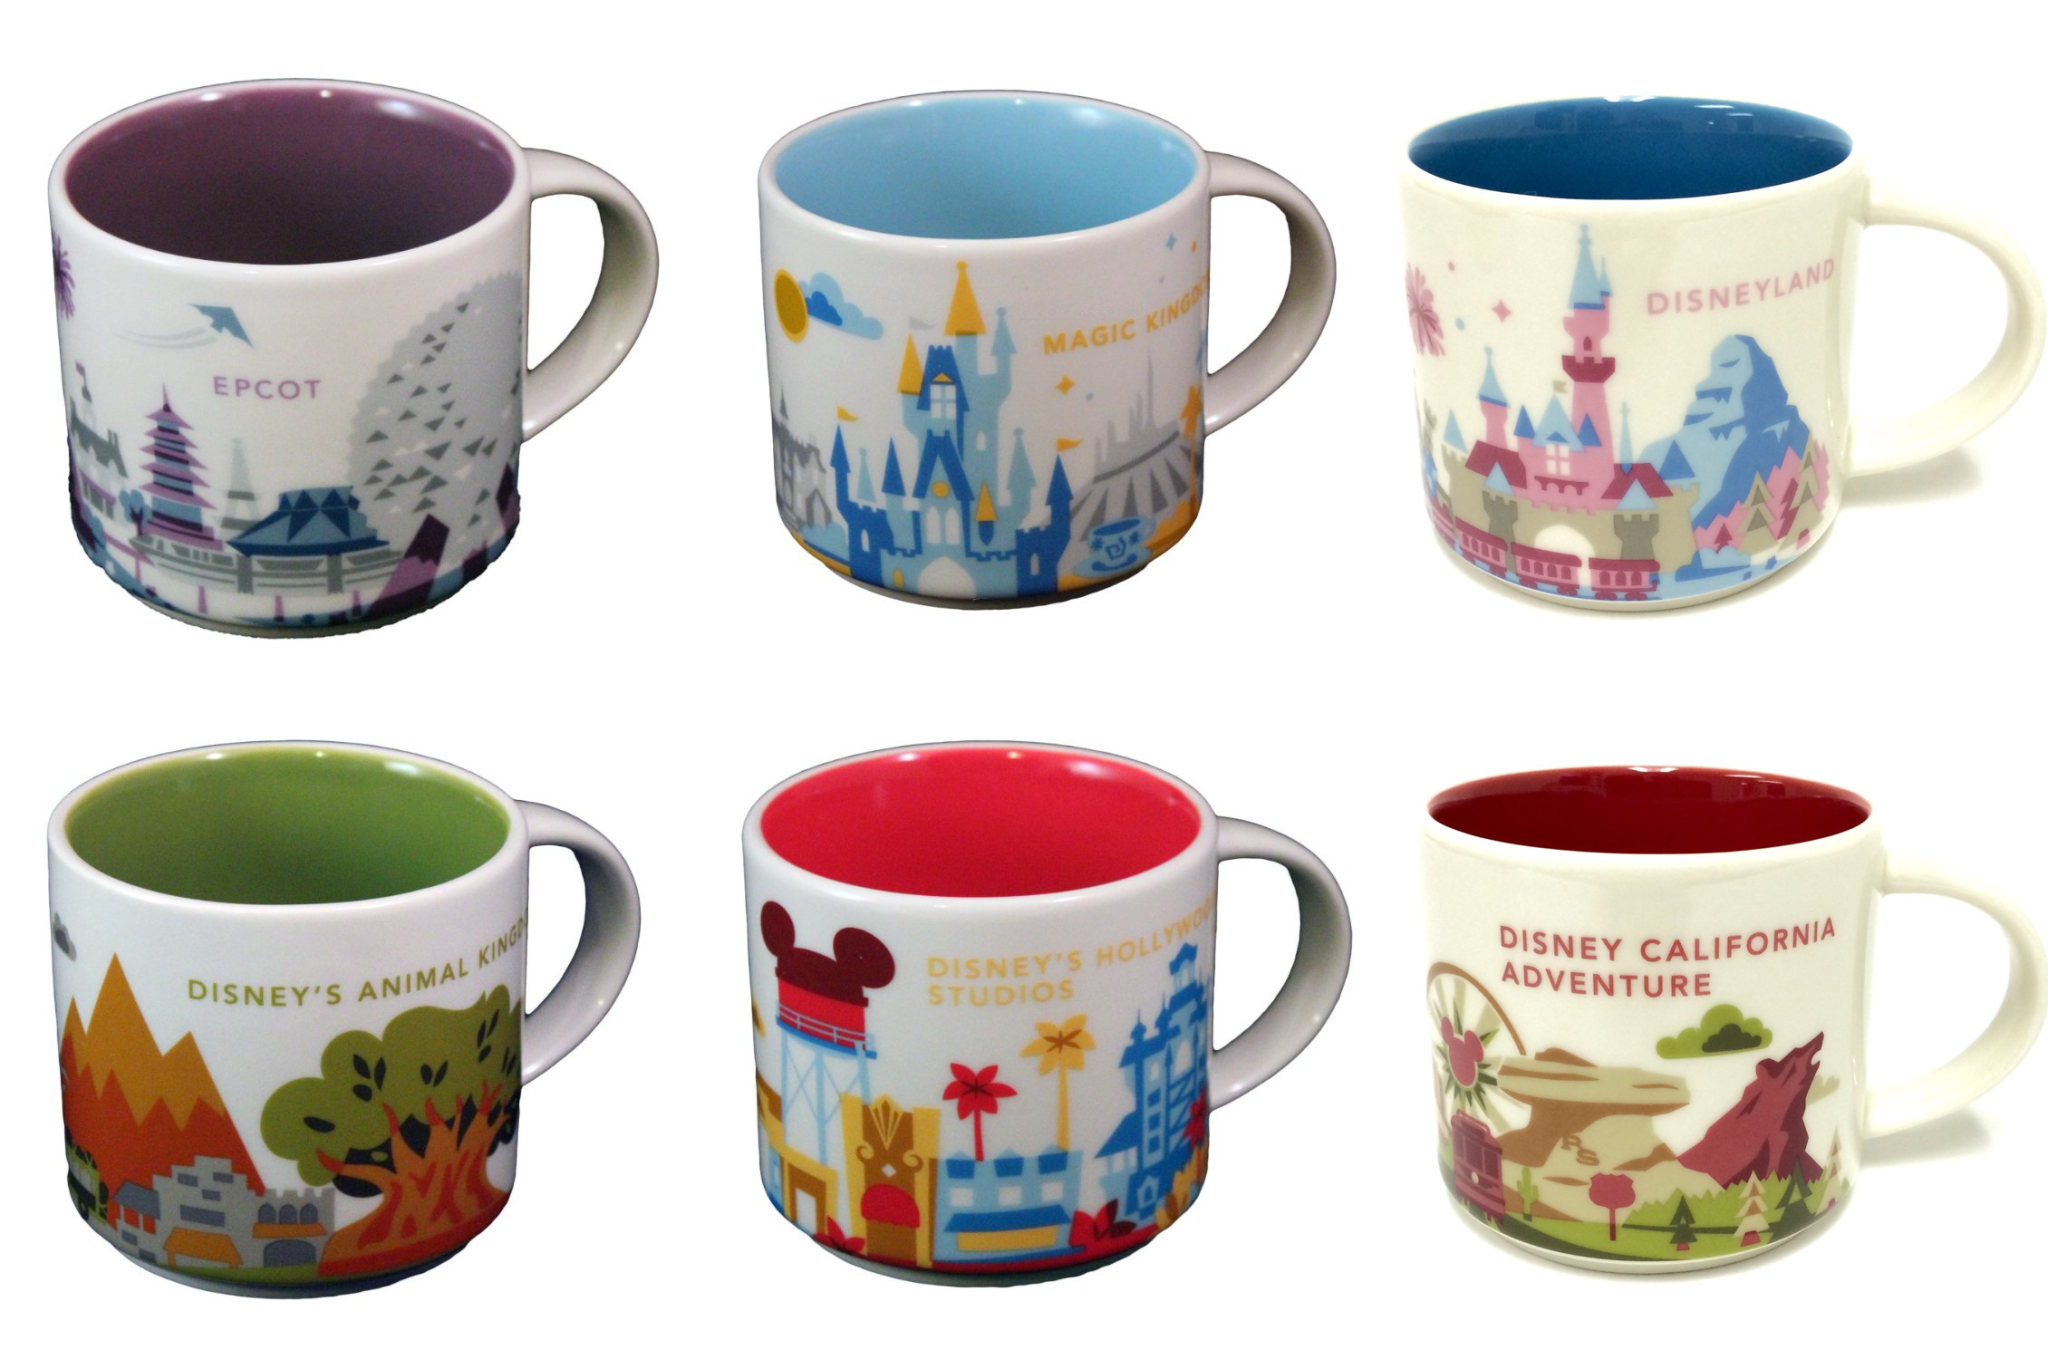 Full Collection of the Disney Starbucks Mugs